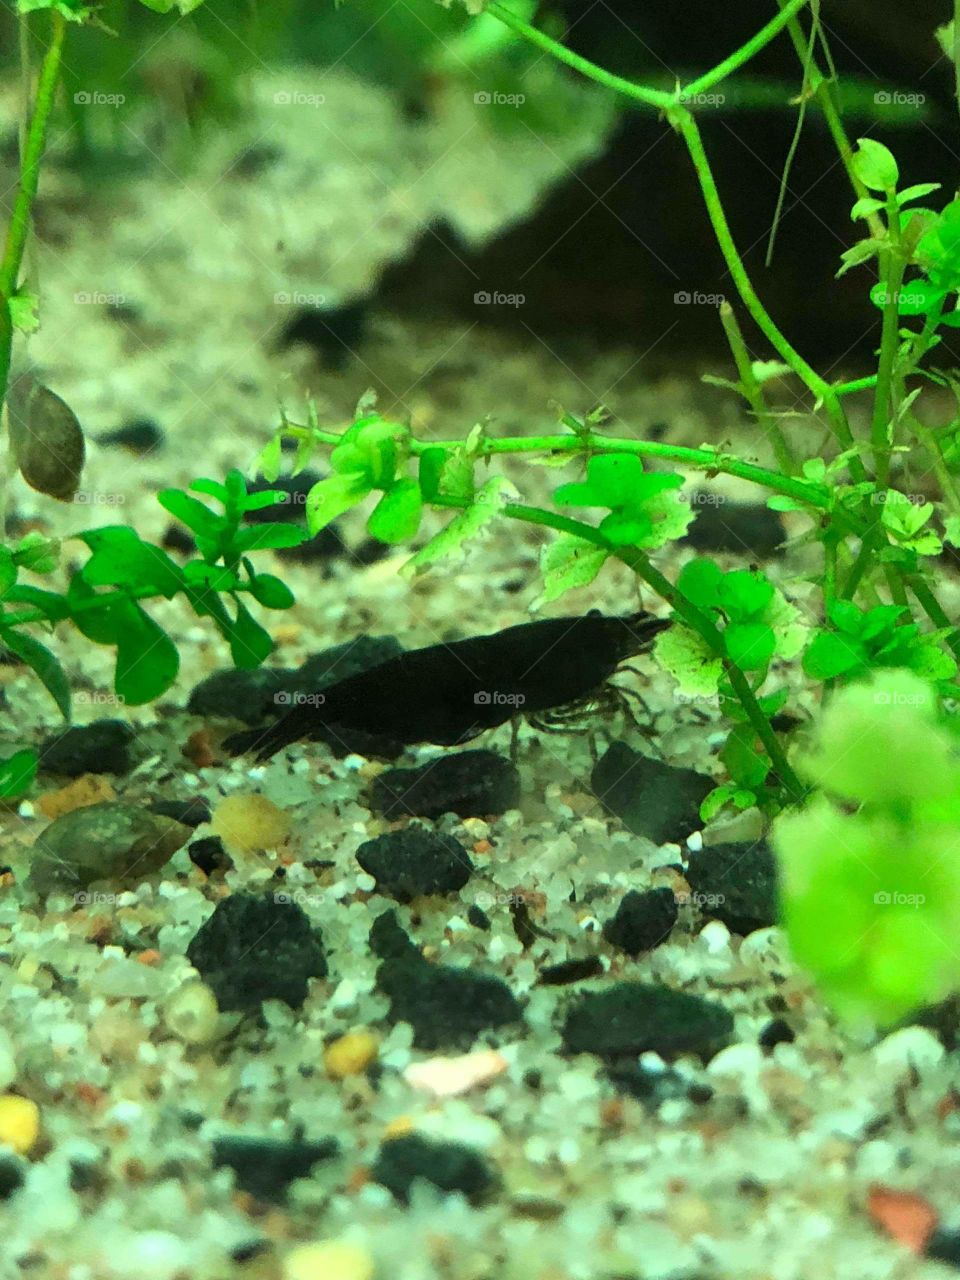 Black Diamond neocardina shrimp